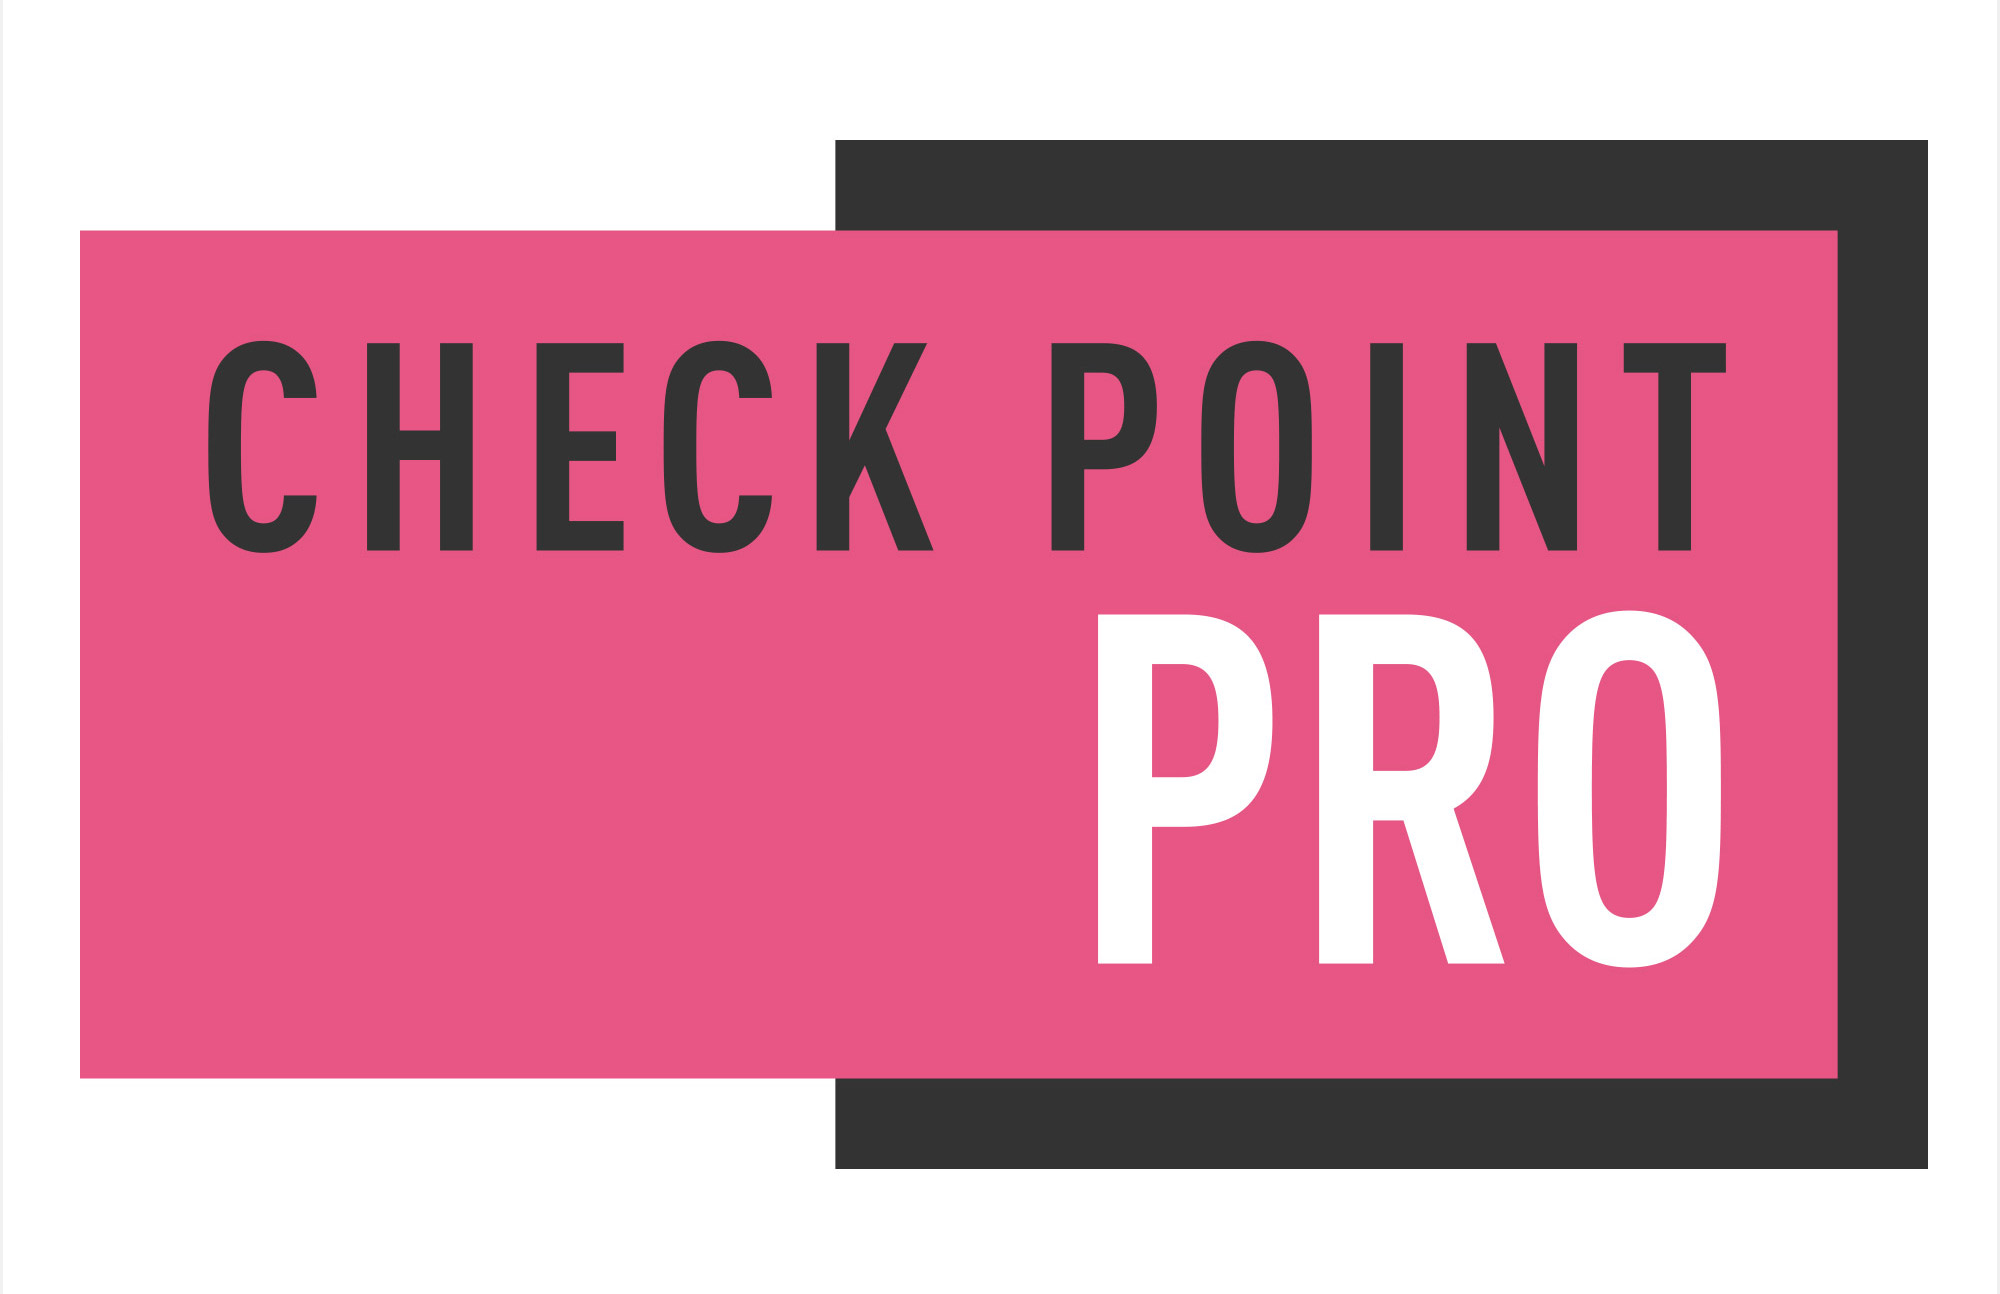 Point support. Checkpoint логотип. Логотип point professional. Check point mobail логотип. Check point Владивосток магазин.